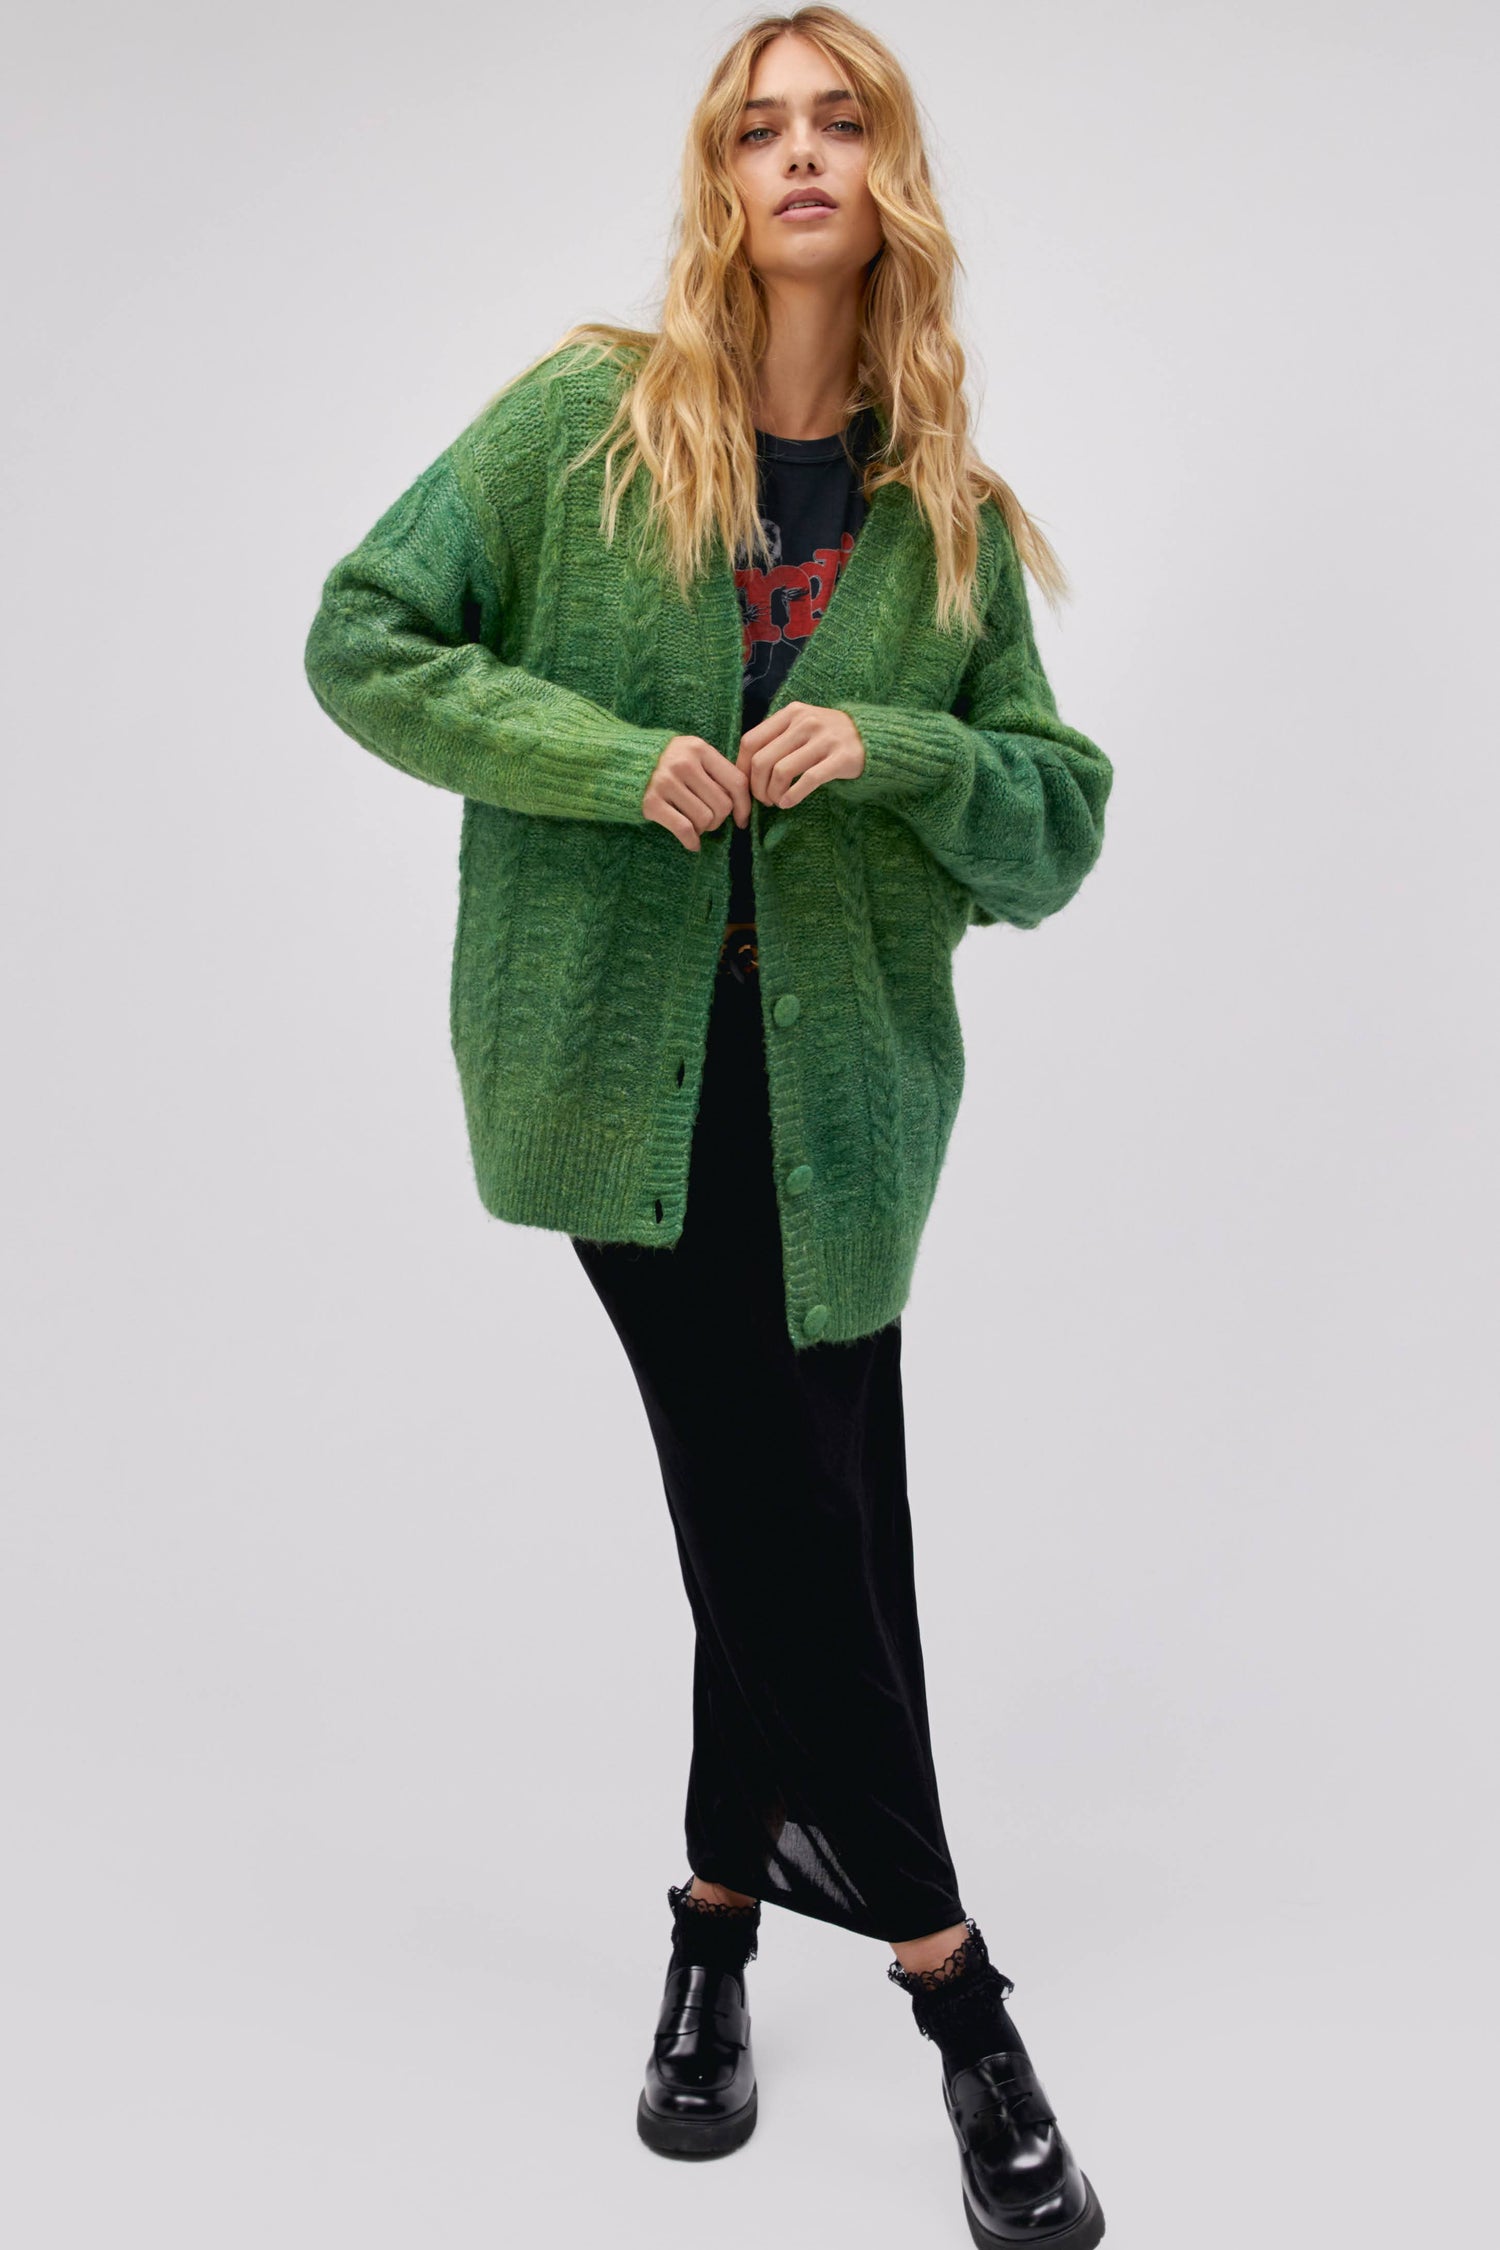 Model wearing an ombre cardigan in green jade.